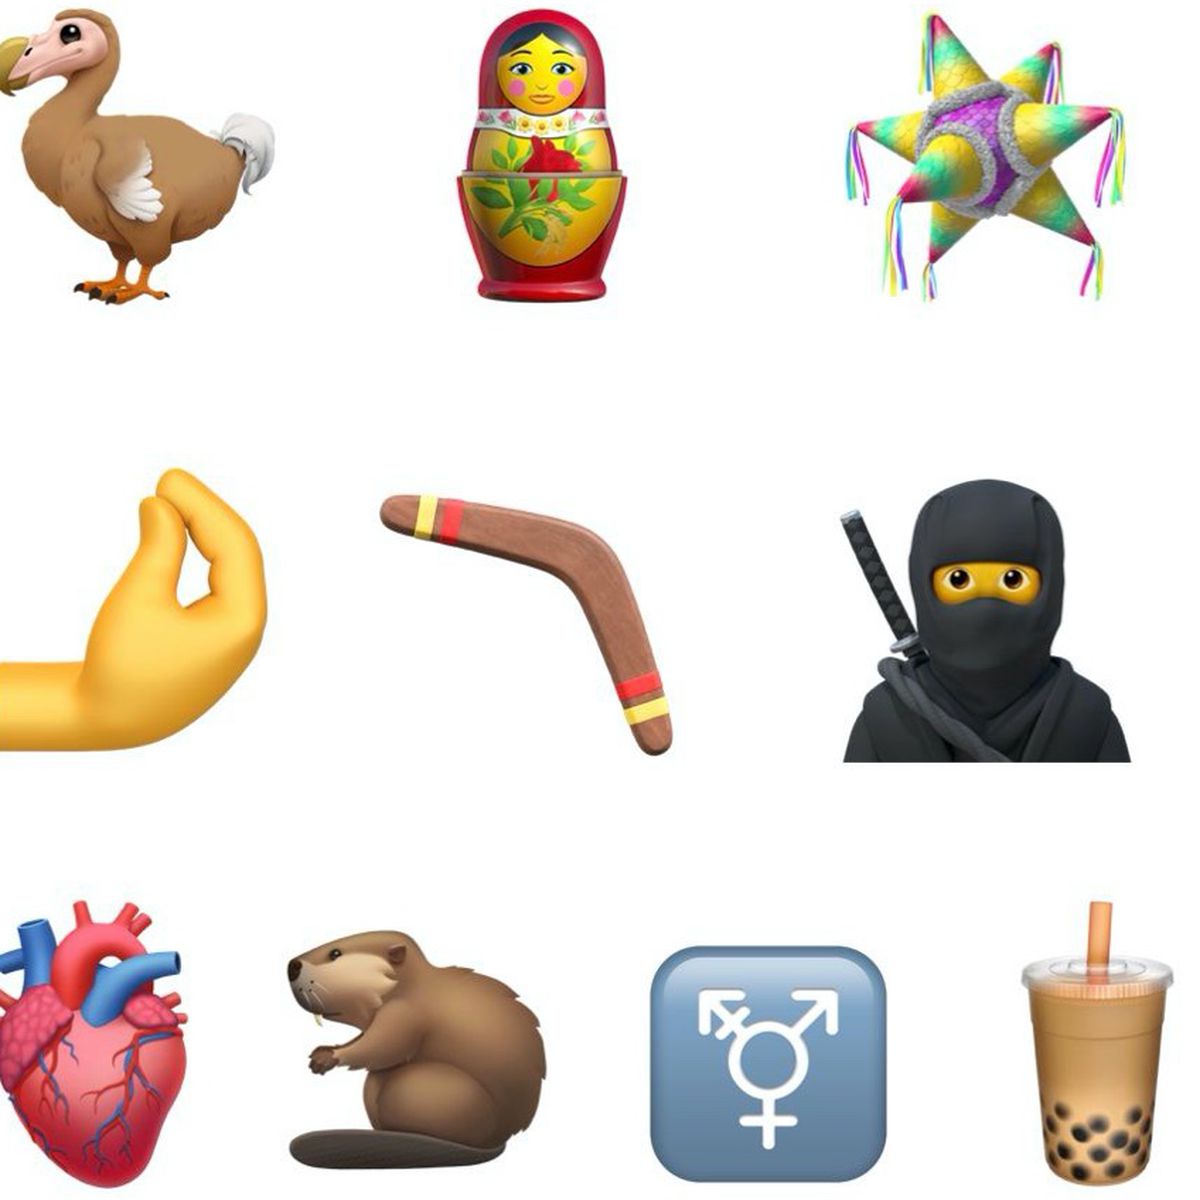 iOS  Emoji: All the New Emoji Found in iOS  - MacRumors